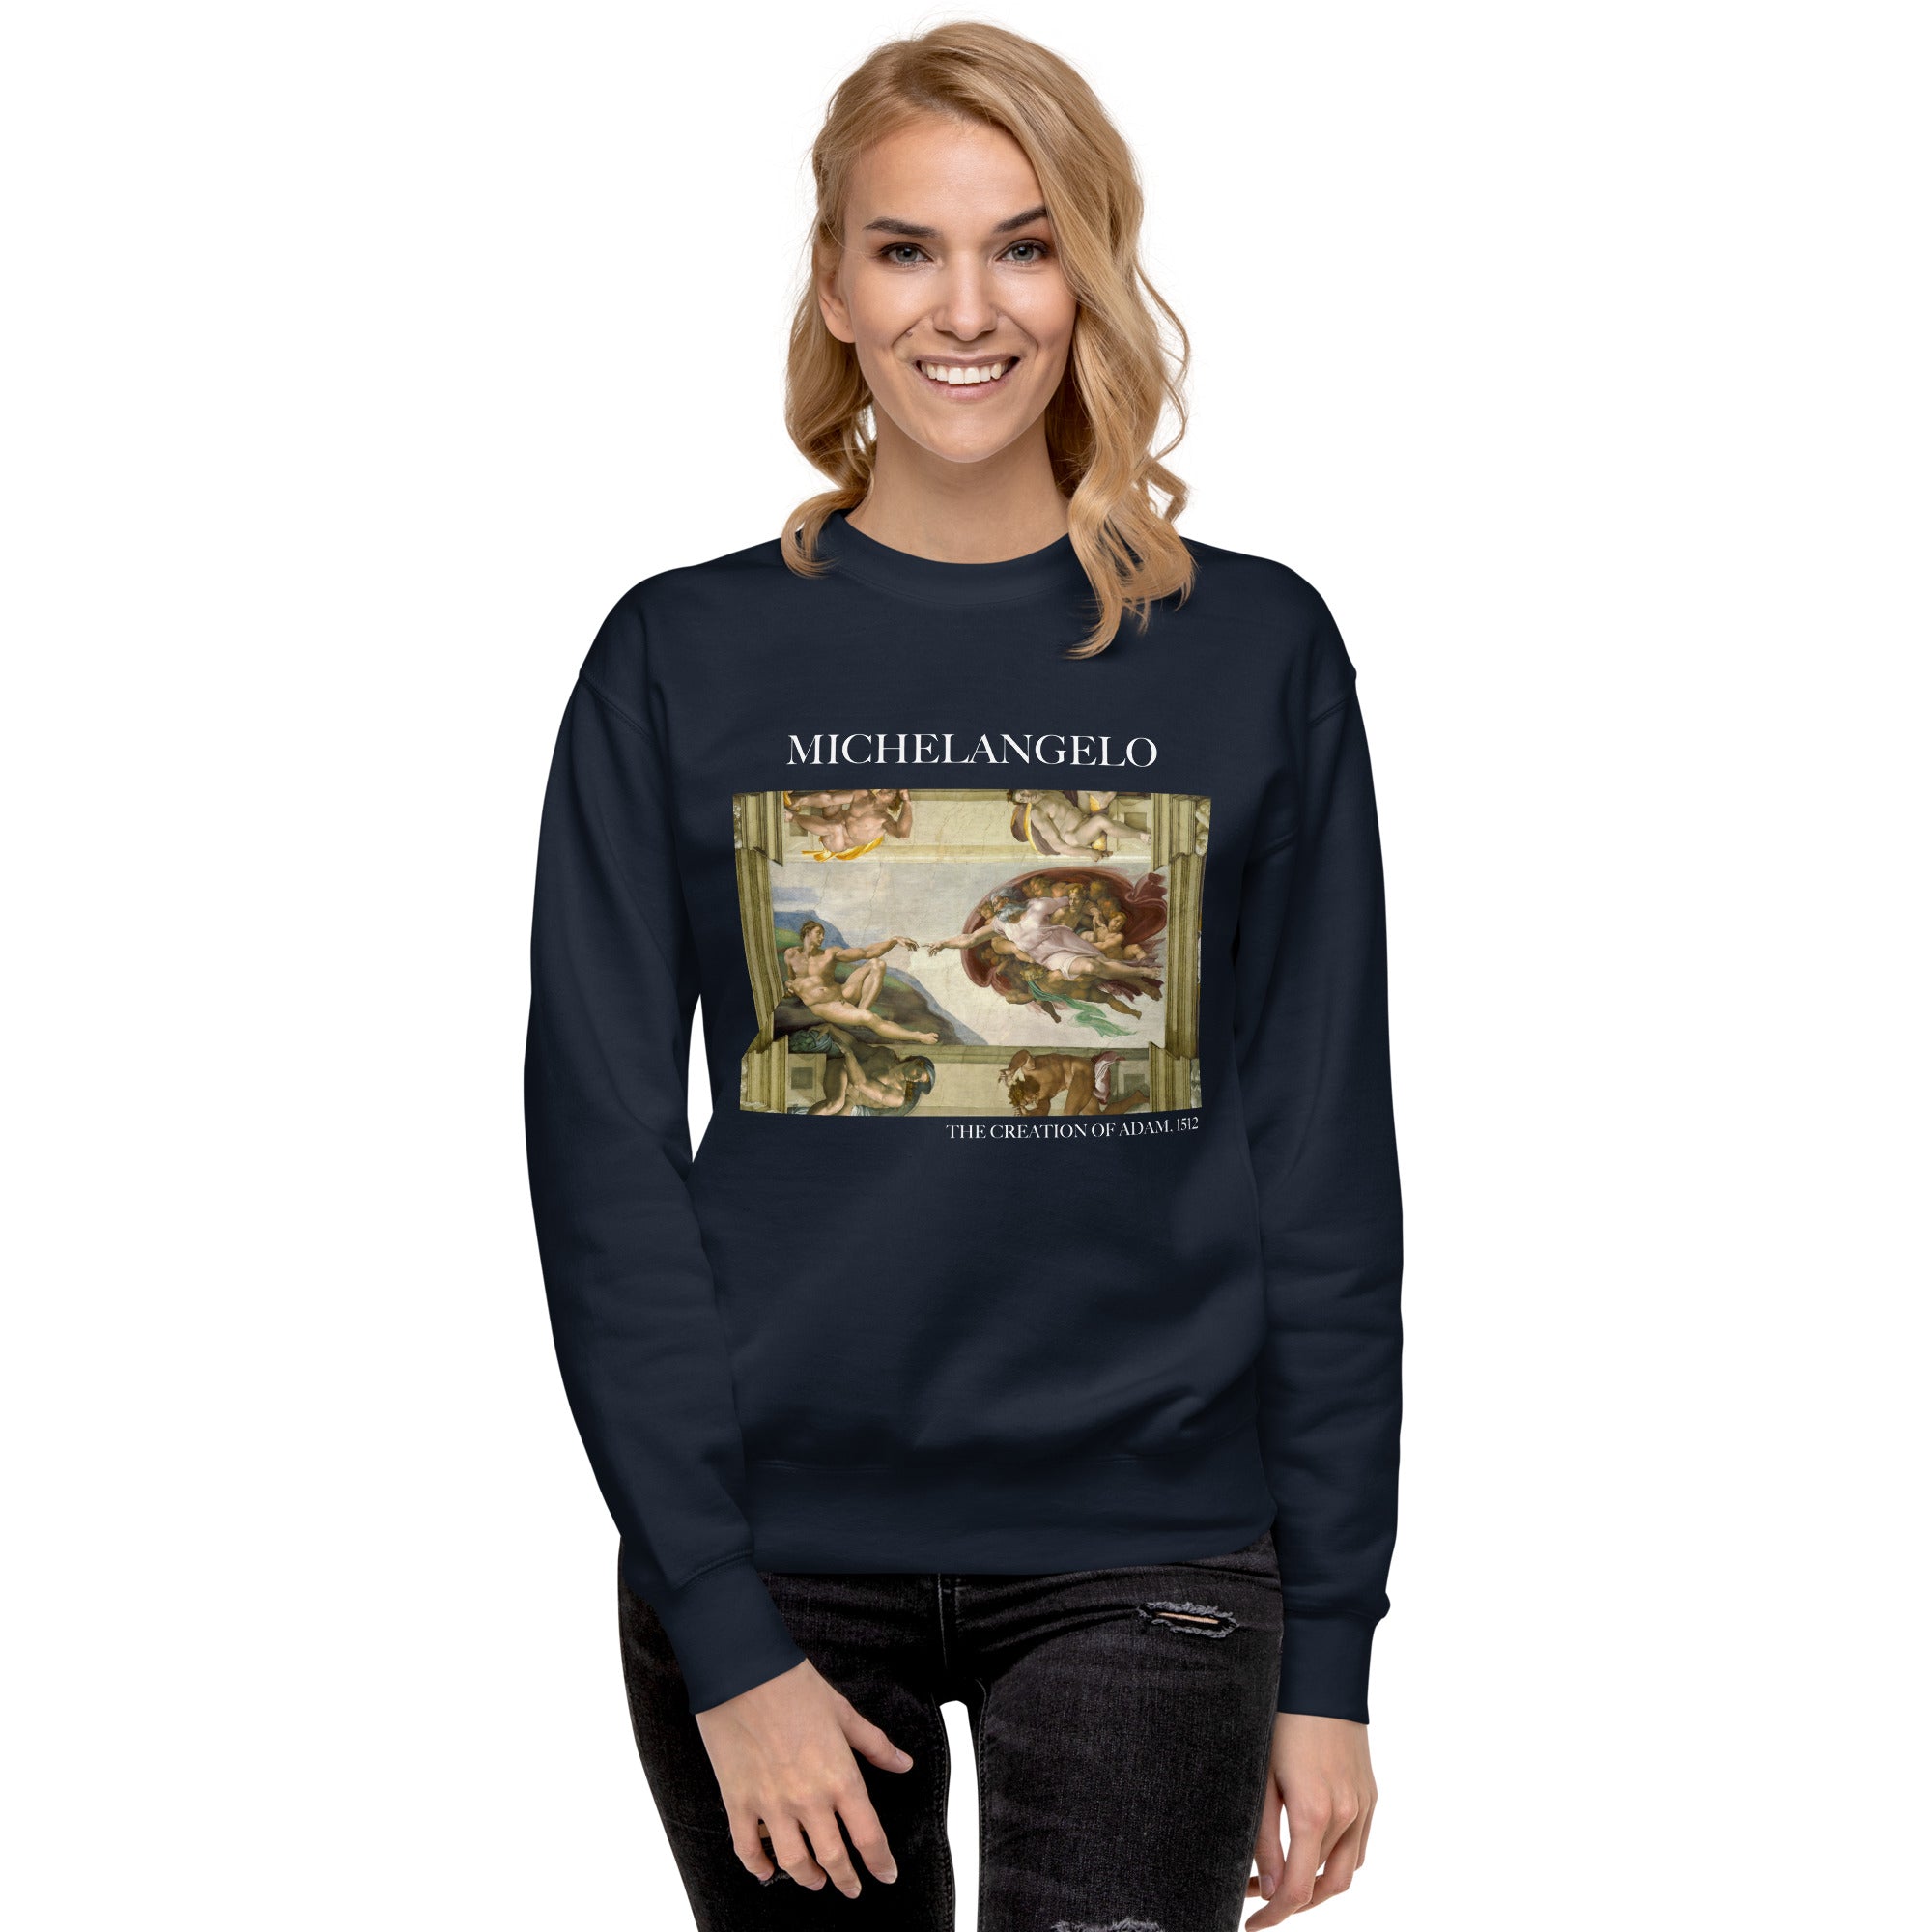 Michelangelo 'The Creation of Adam' Famous Painting Sweatshirt | Unisex Premium Sweatshirt